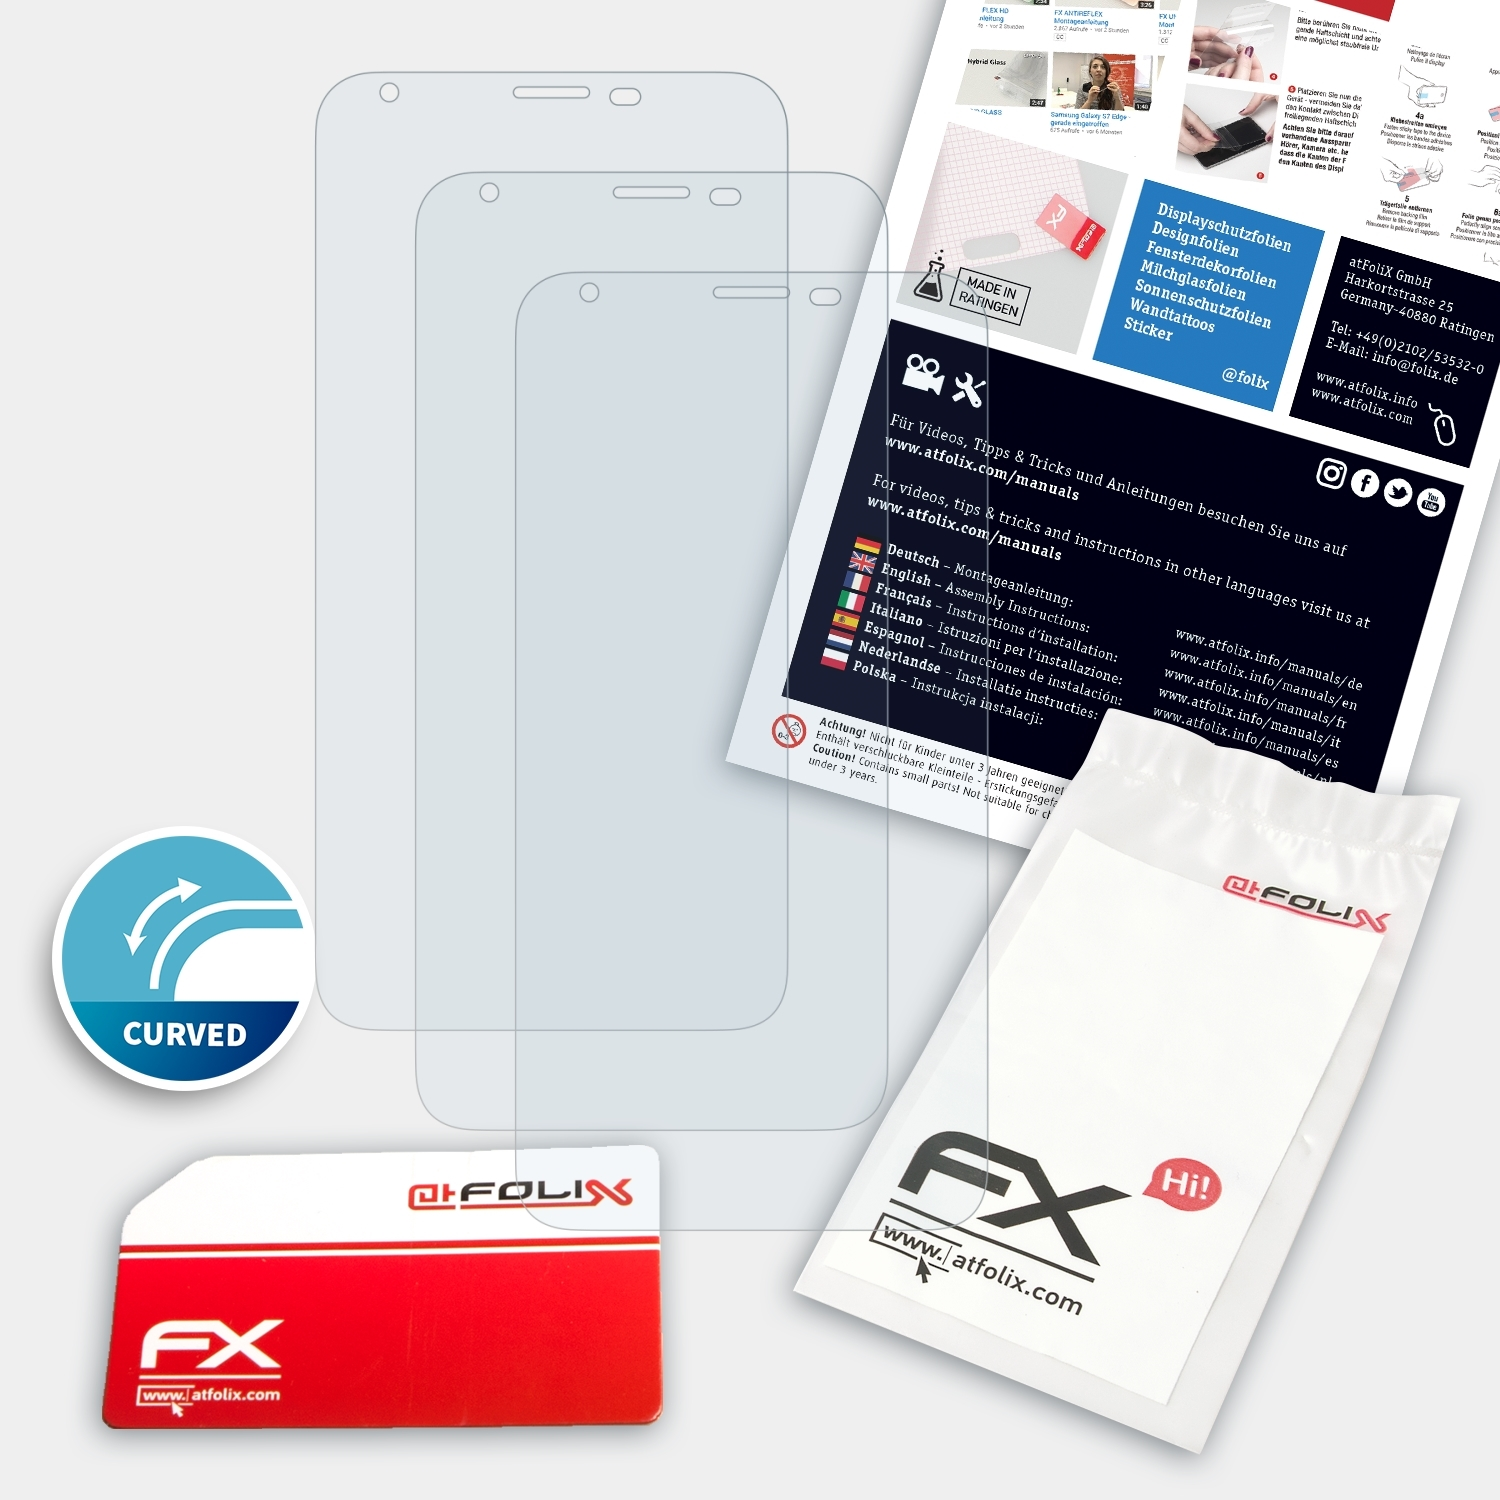 ATFOLIX 3x LG FX-ActiFleX V30) Displayschutz(für